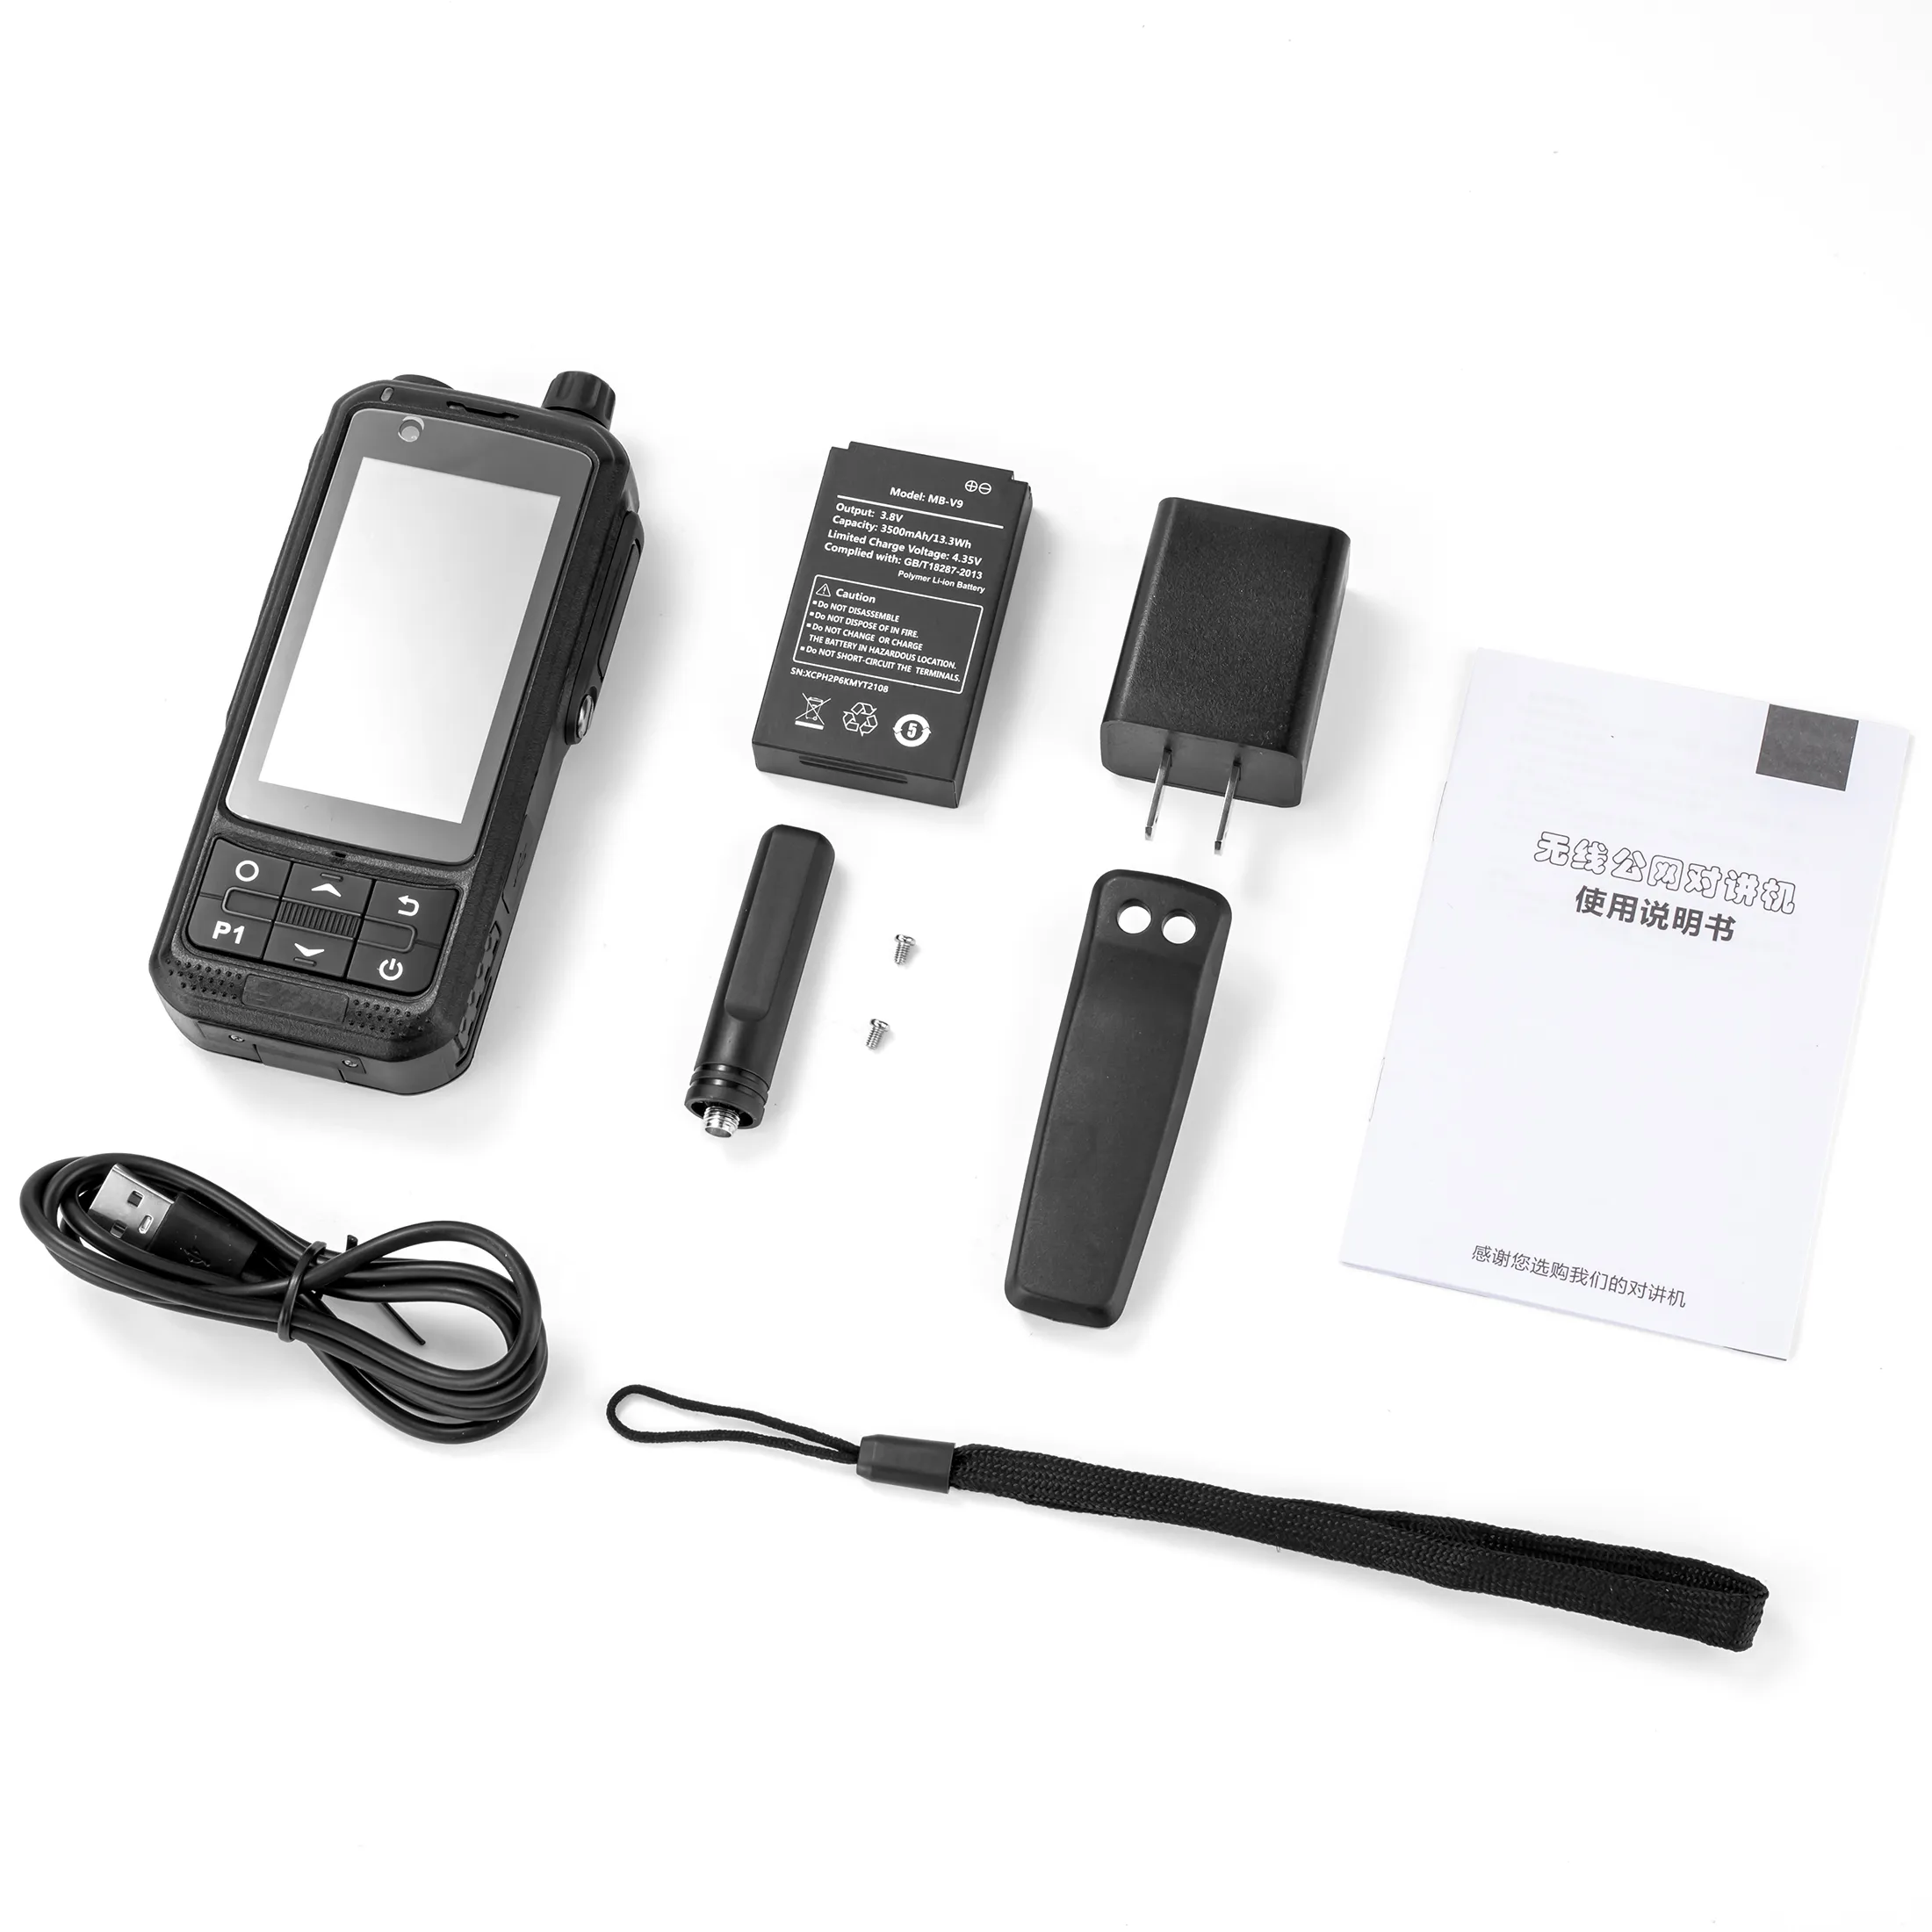 Easycom V970 Walkie talkie zello profissional 4G Rede de rádio GPS tela sensível ao toque Walkie Talkie longo alcance